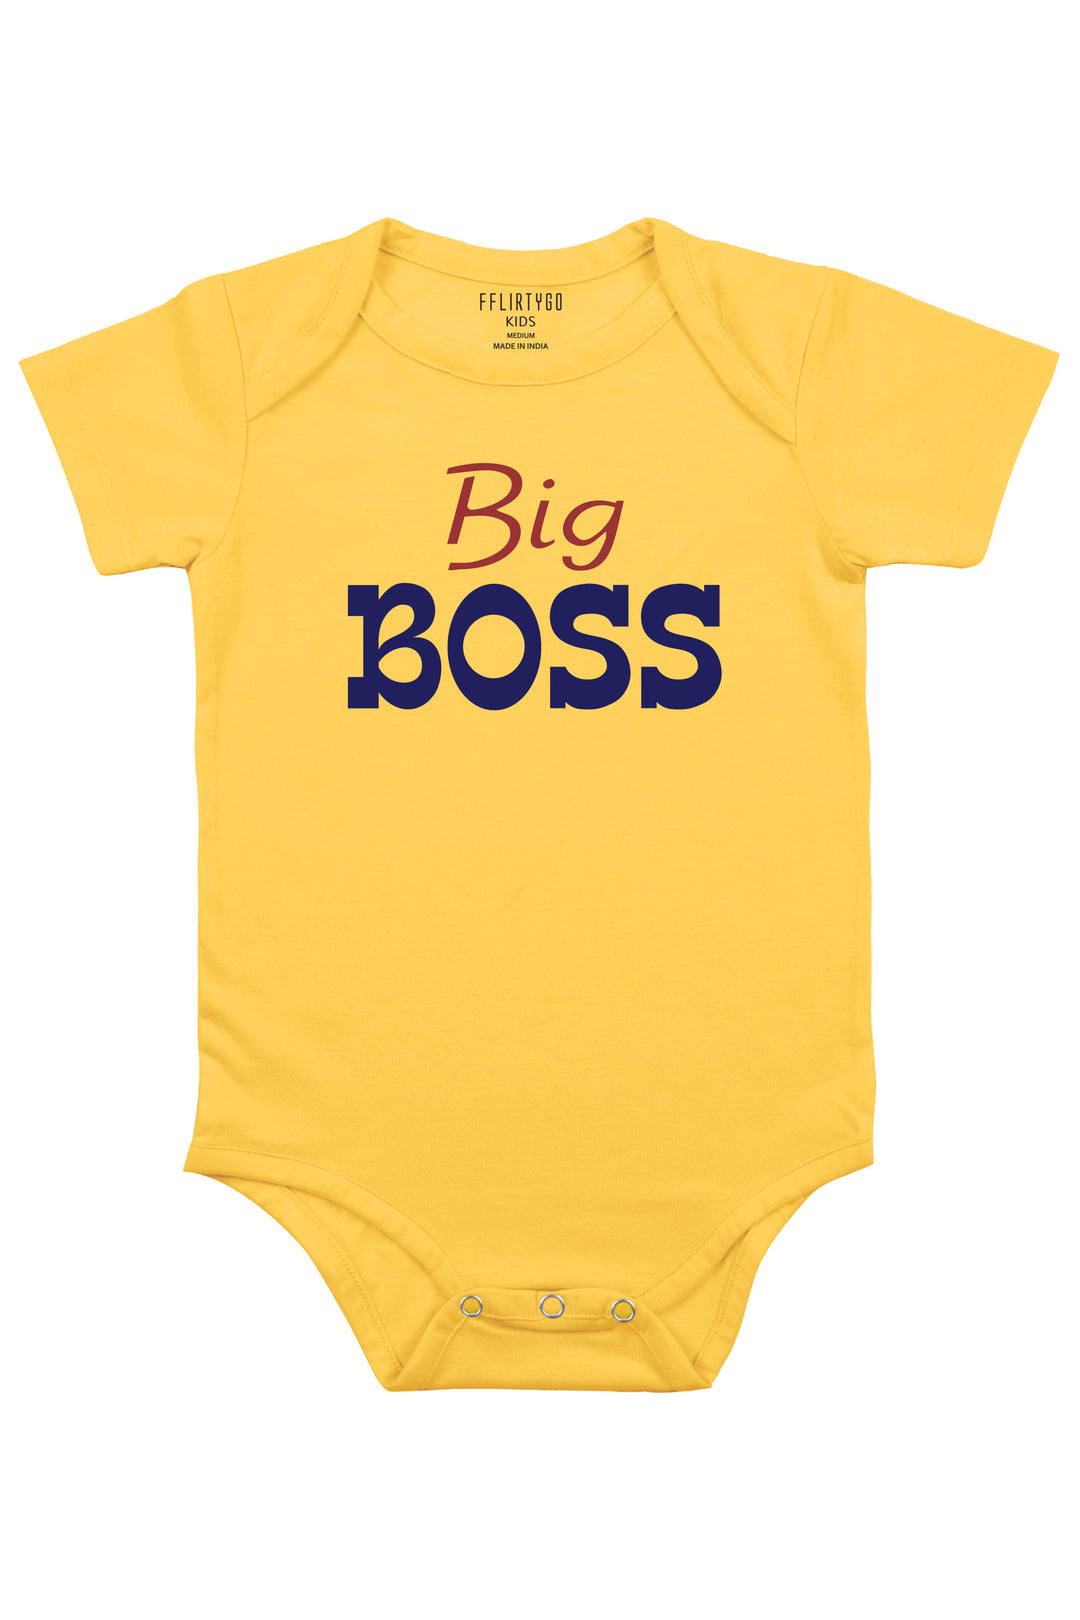 Big Boss Baby Romper | Onesies